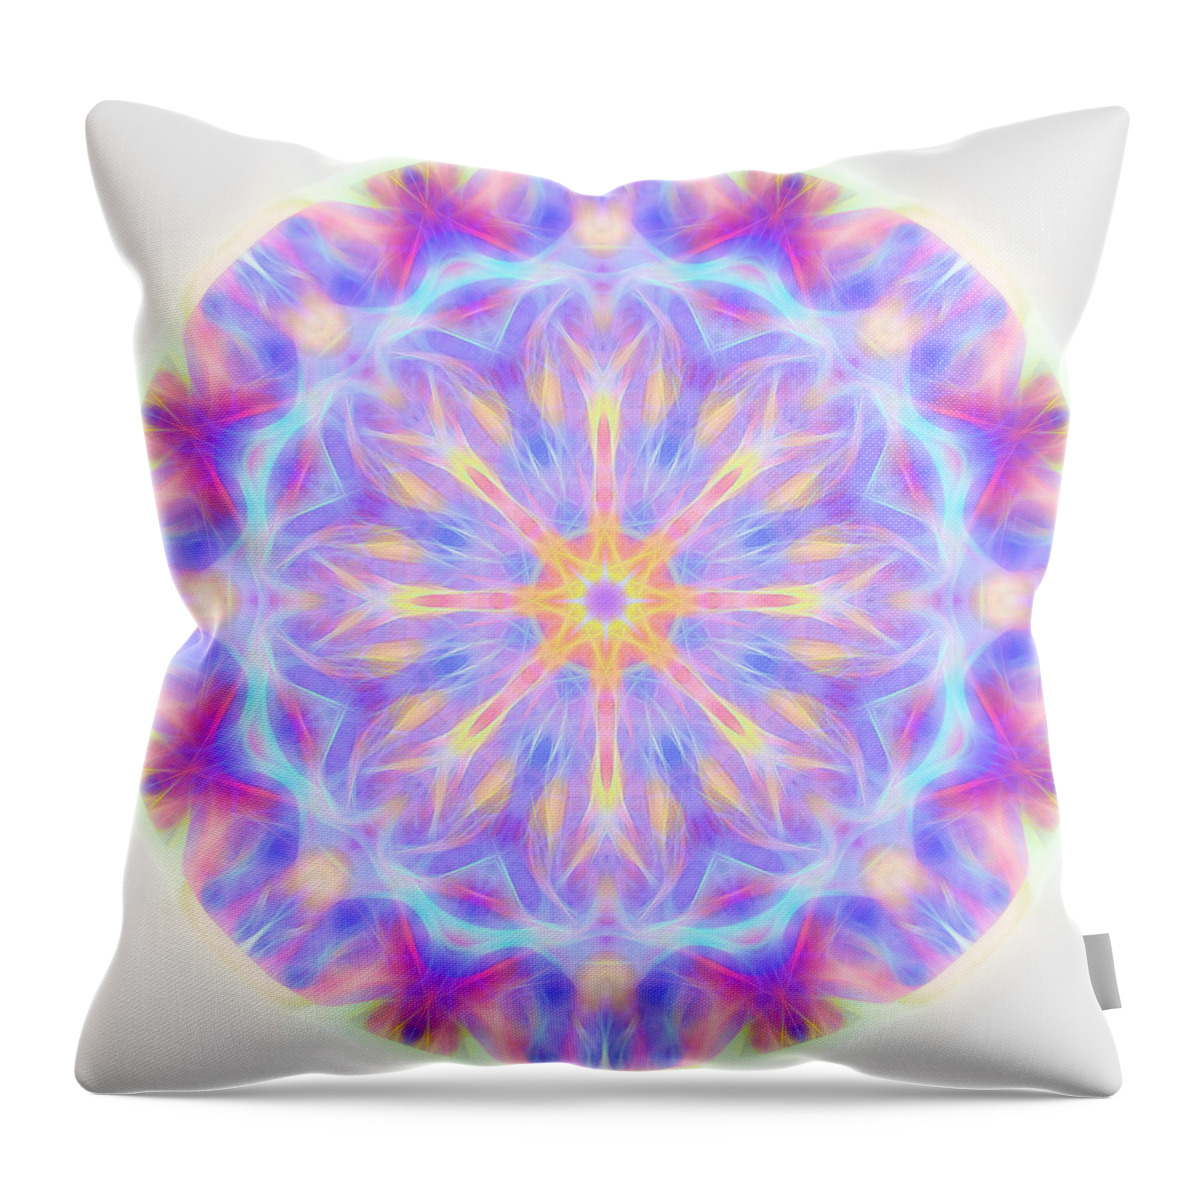 Mandala Throw Pillow featuring the digital art Spring Energy Mandala 3 by Beth Venner